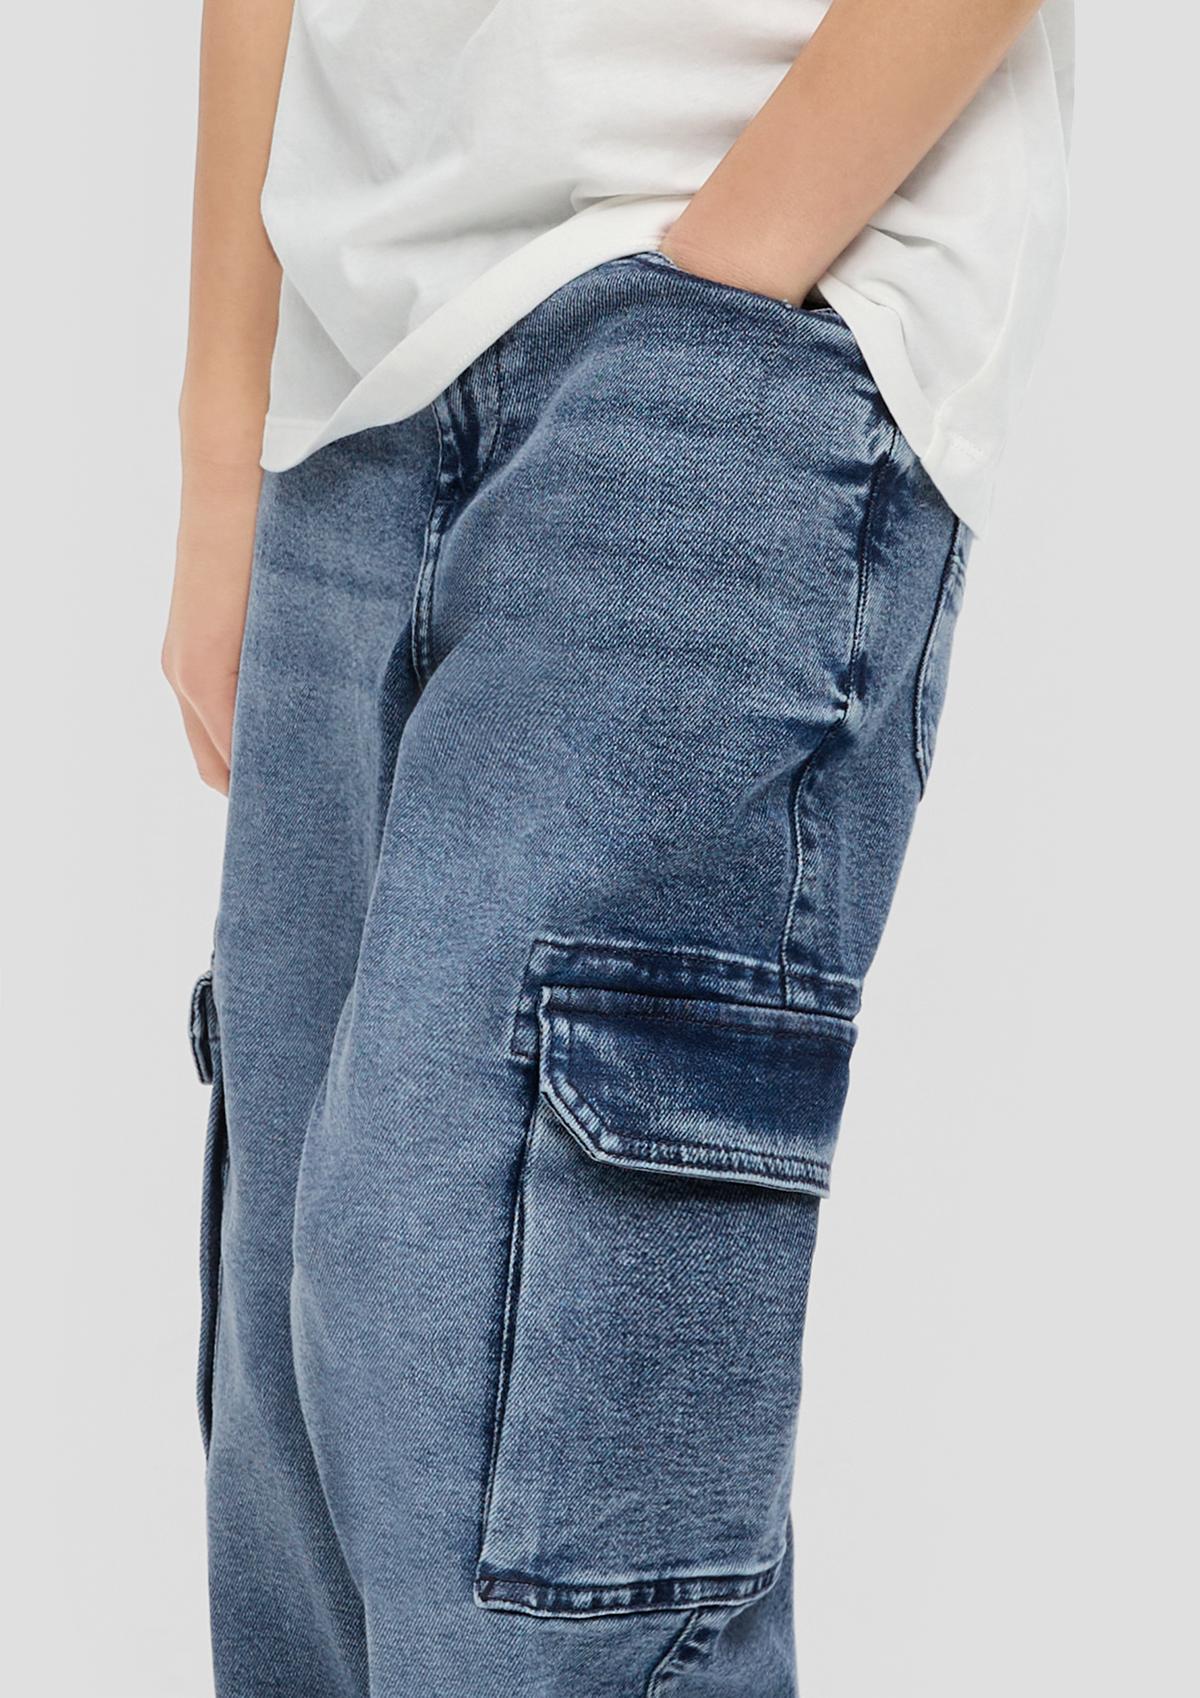 s.Oliver Jeans / Regular fit / Mid rise / Slim leg